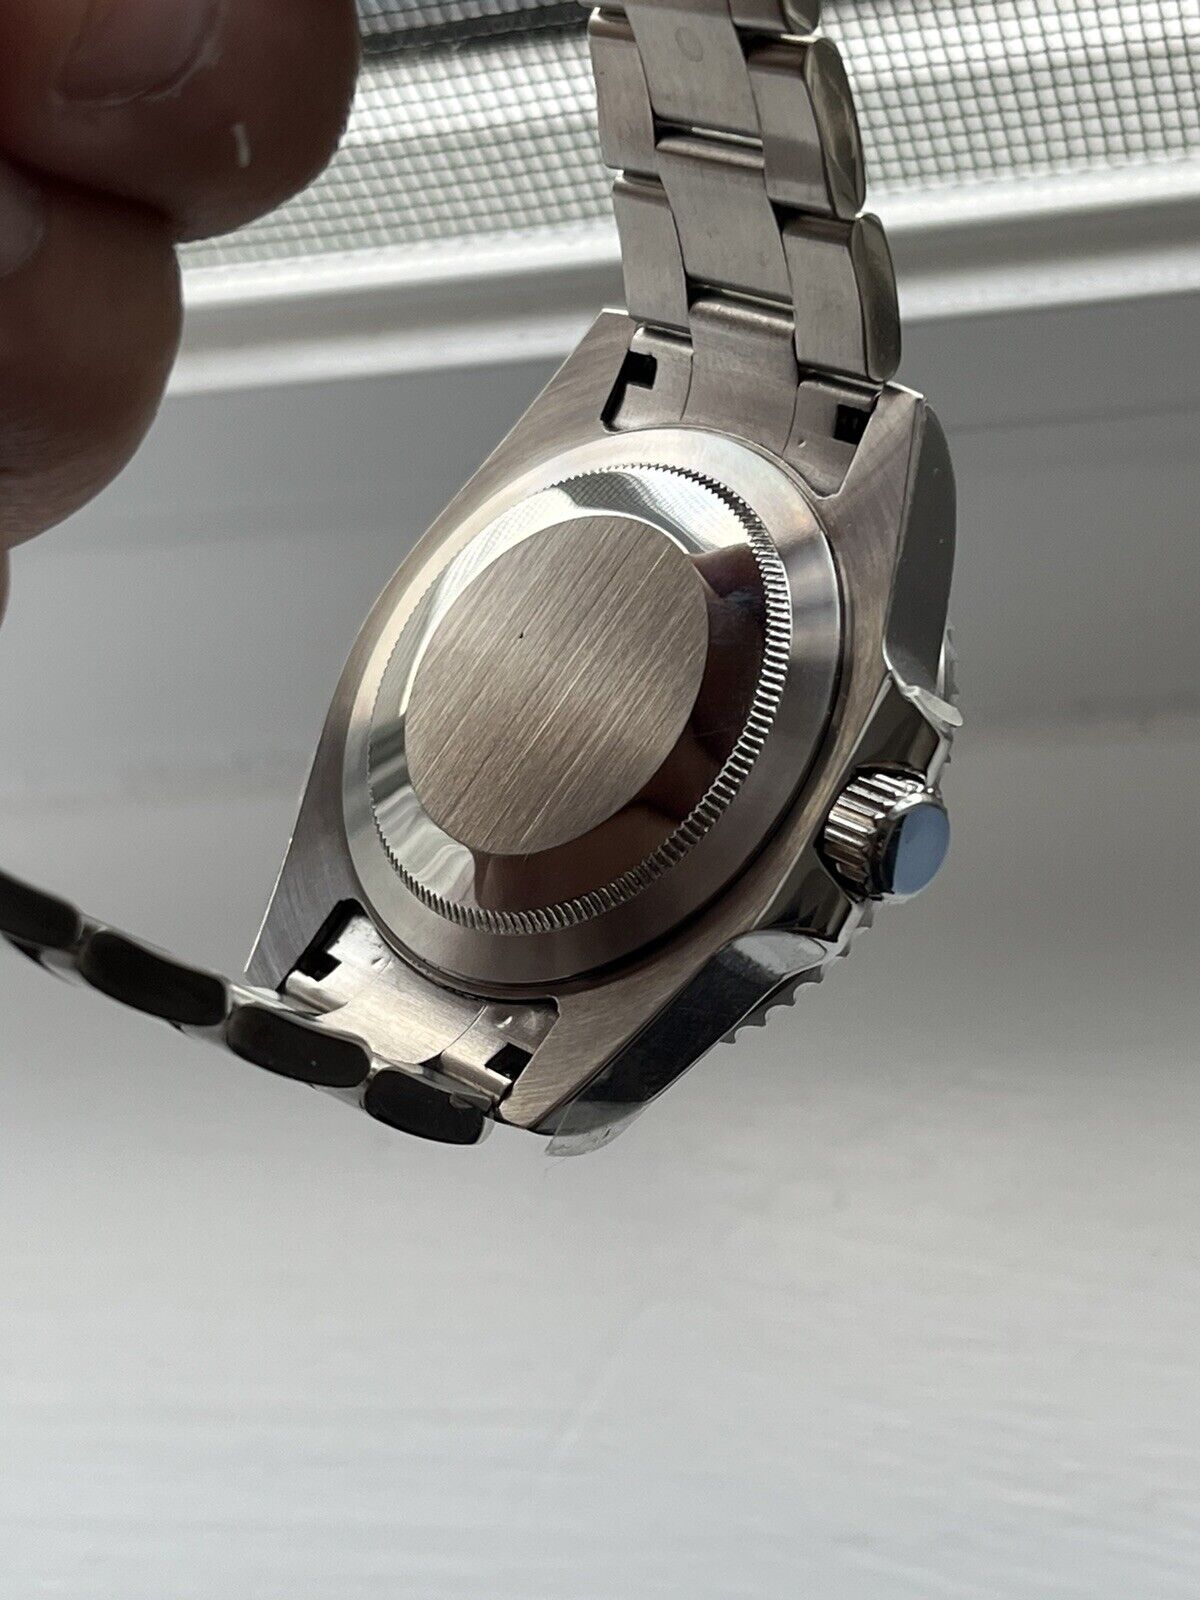 custom build seiko NH35A movement mod watch - rainbow automatic stainless steel bracelet